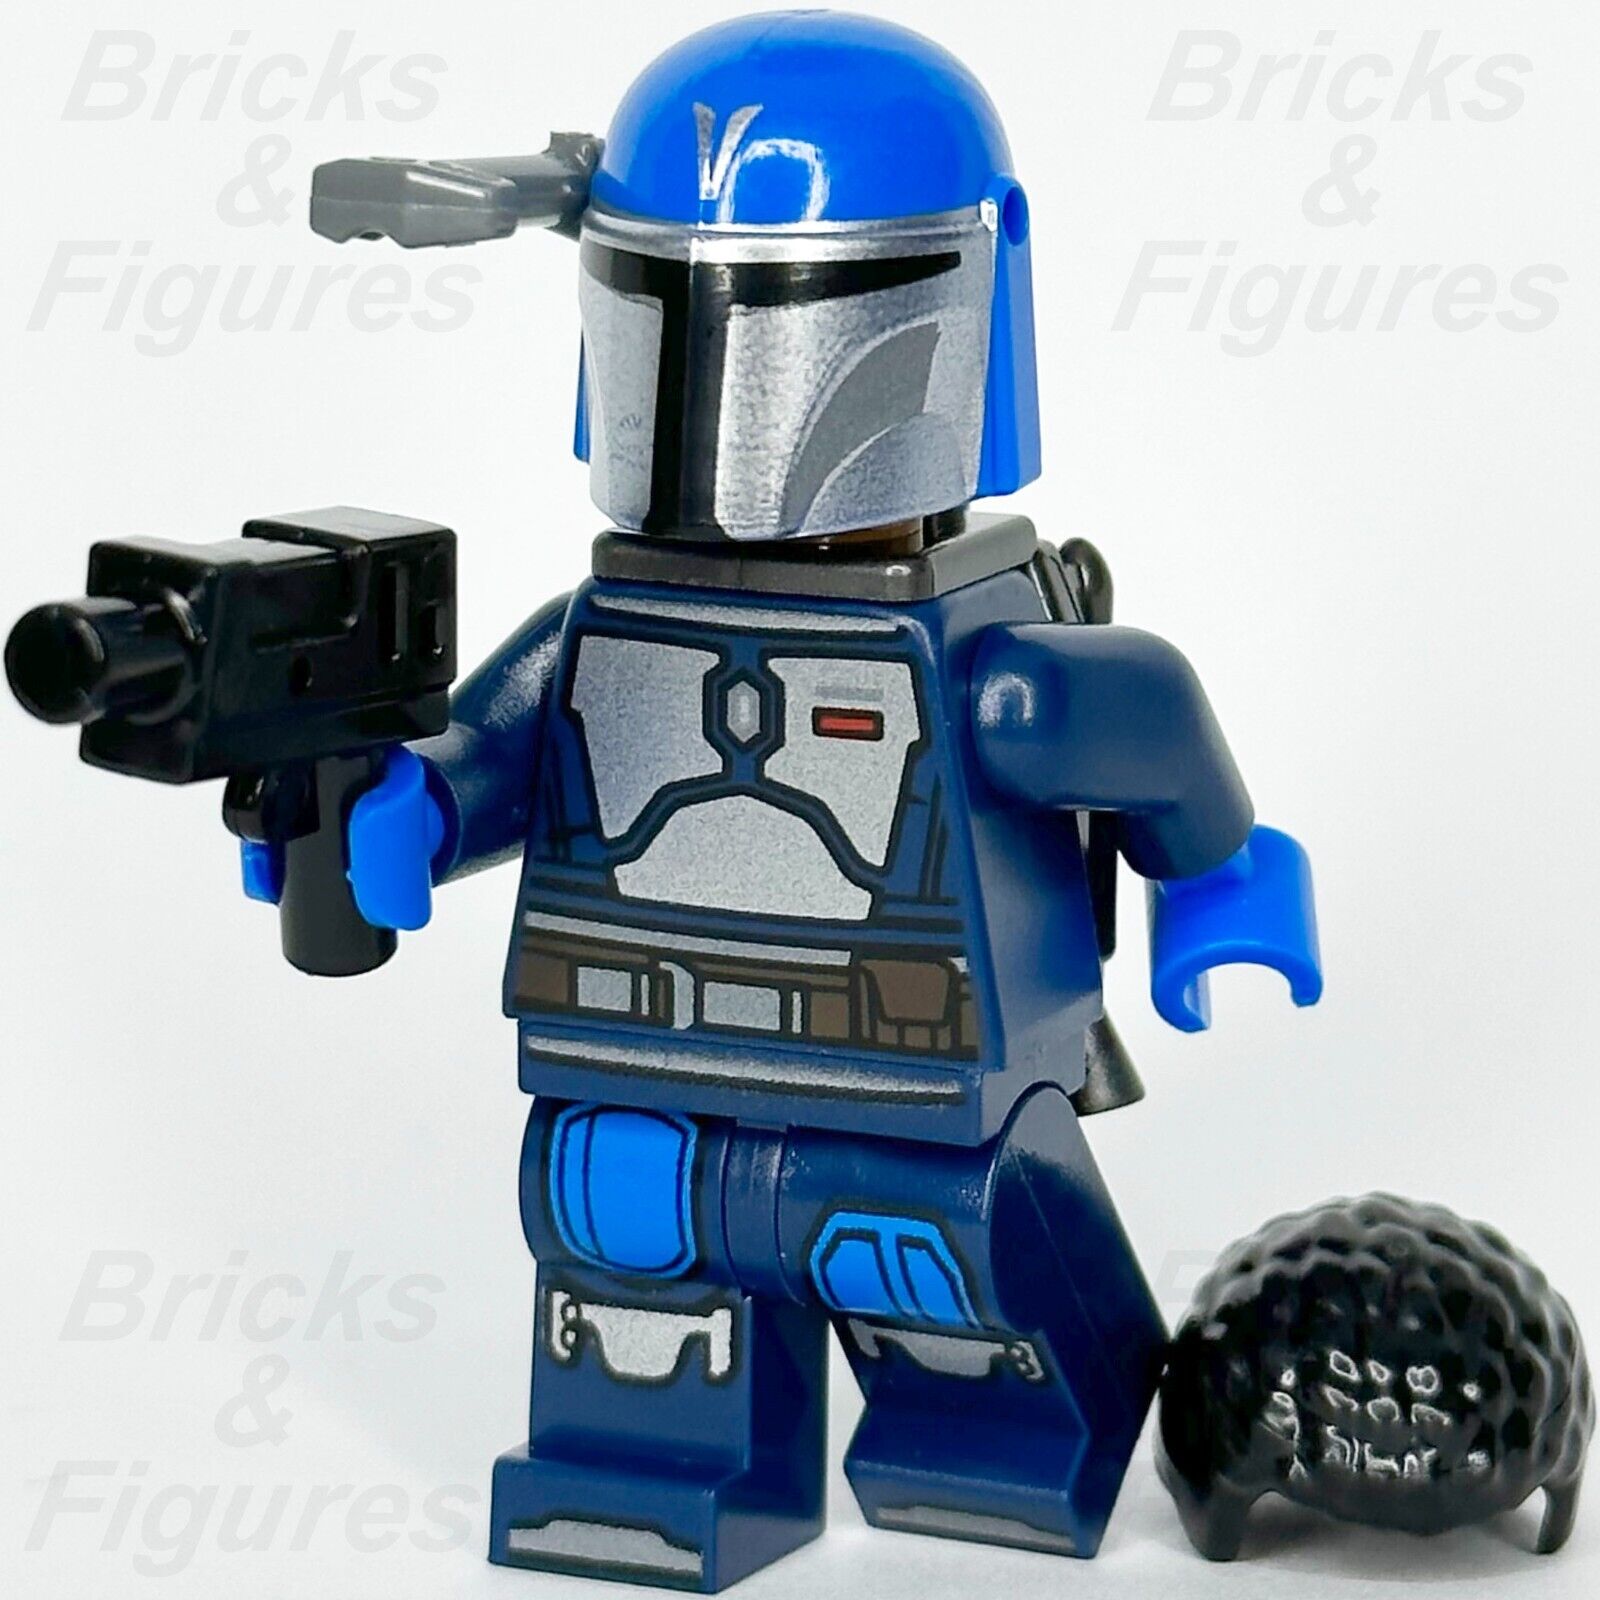 LEGO Star Wars Mandalorian Fleet Commander Minifigure with Helmet 75348 sw1259 1